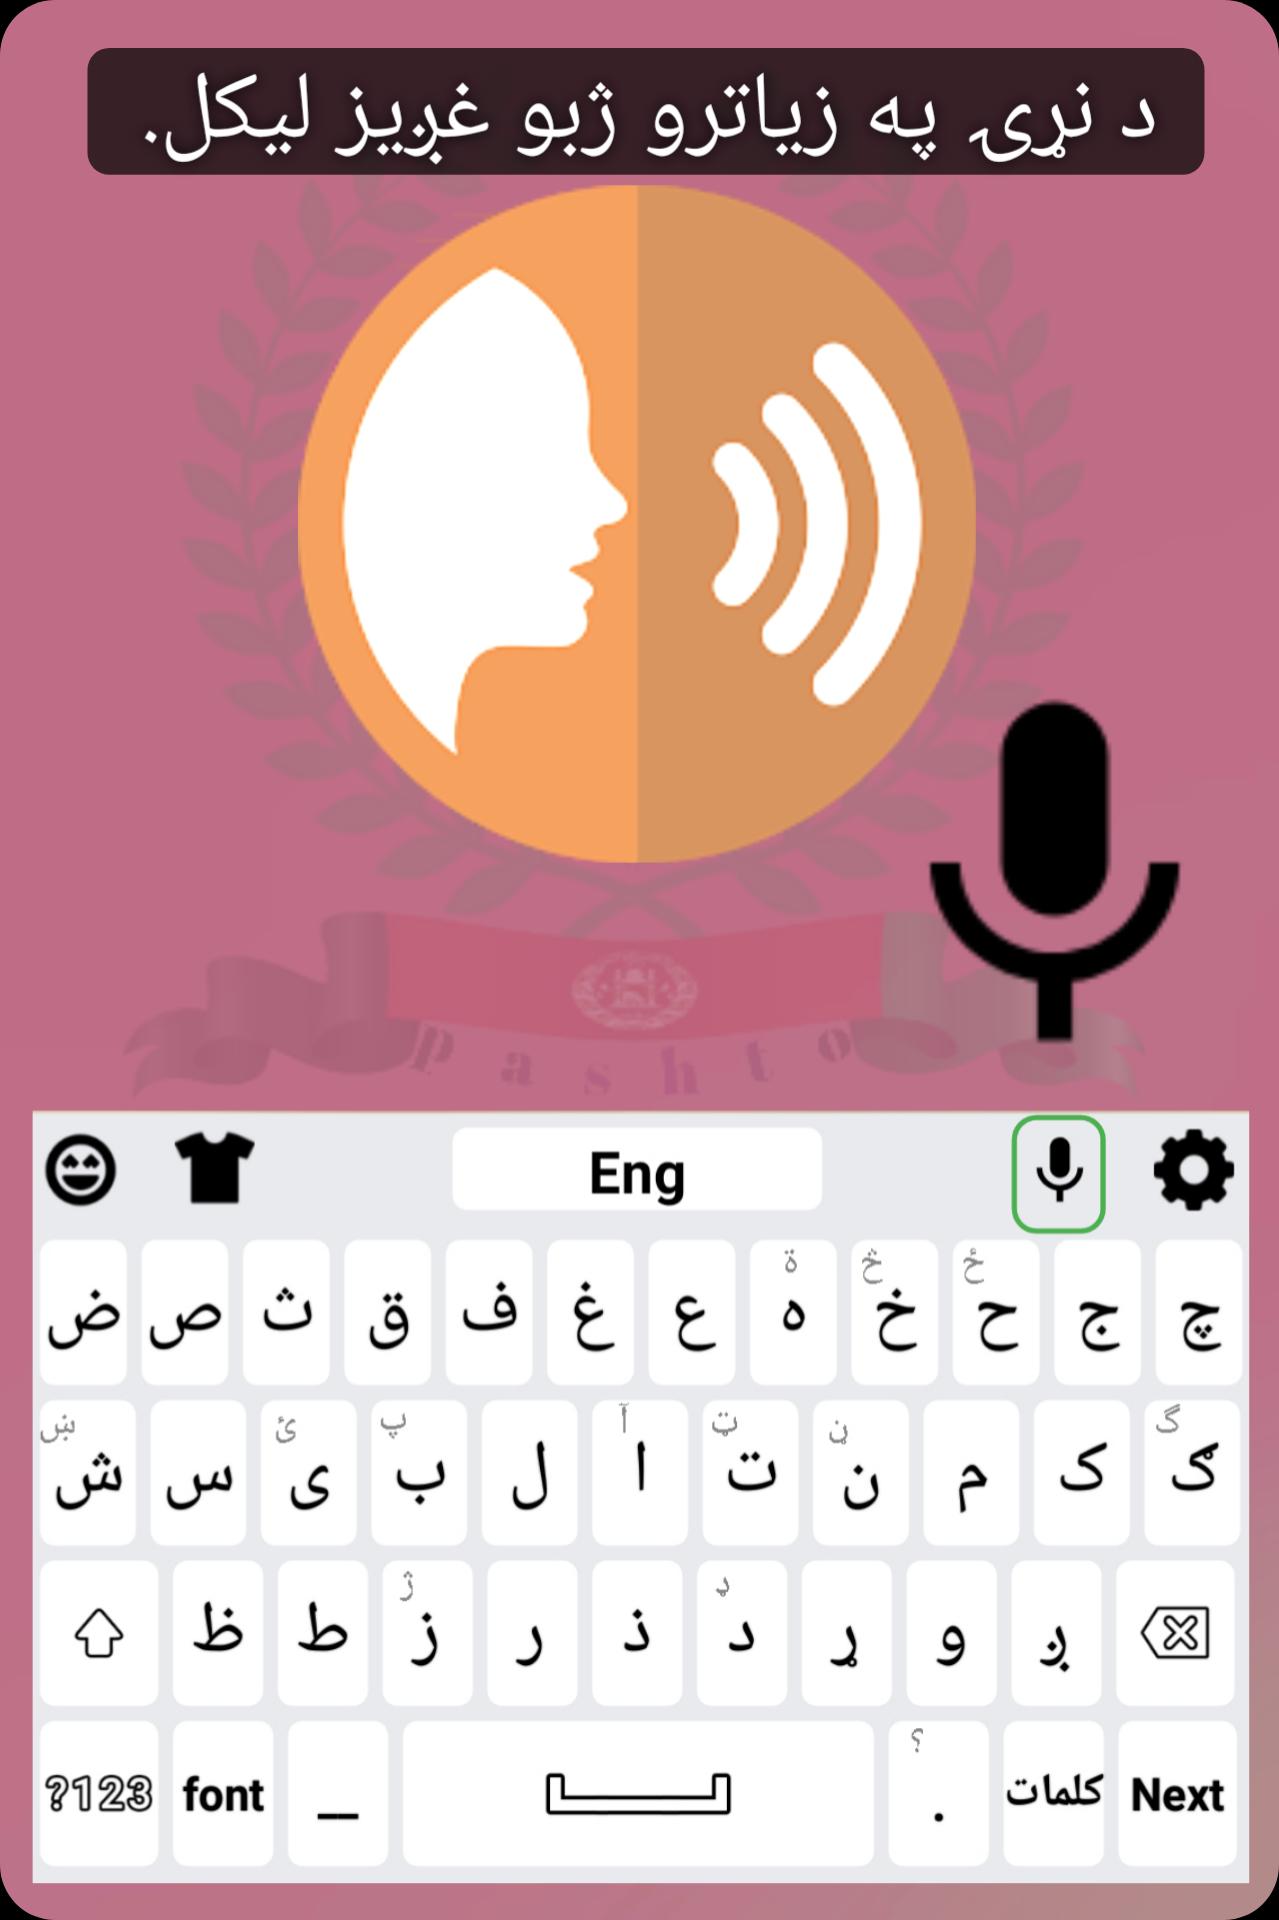 Smart pashto keyboard - Pashto English keyboard for Android - APK Download